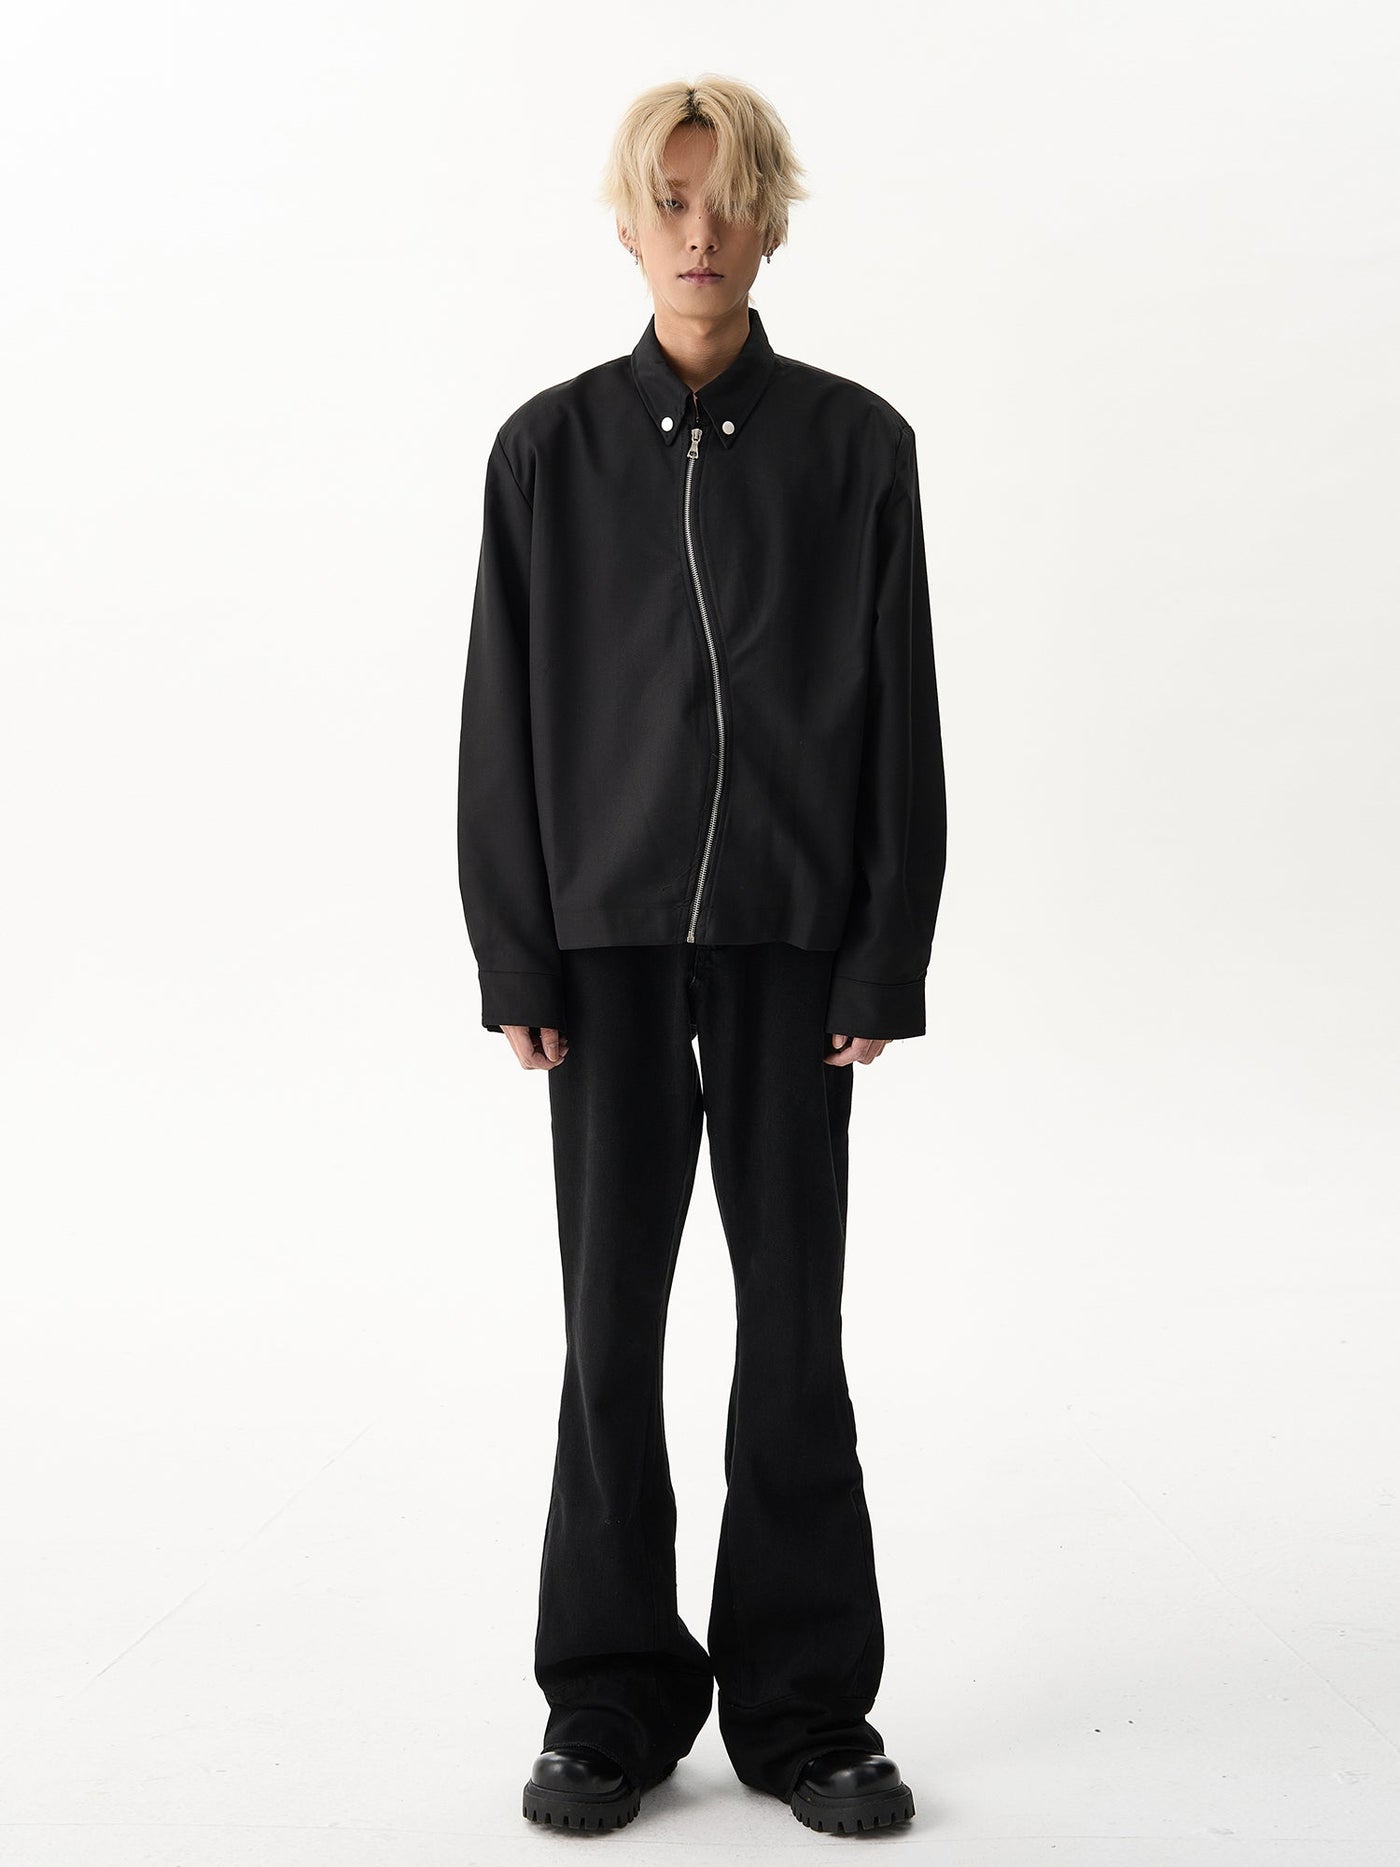 Curved Zipper Lapel Jacket Korean Street Fashion Jacket By Ash Dark Shop Online at OH Vault